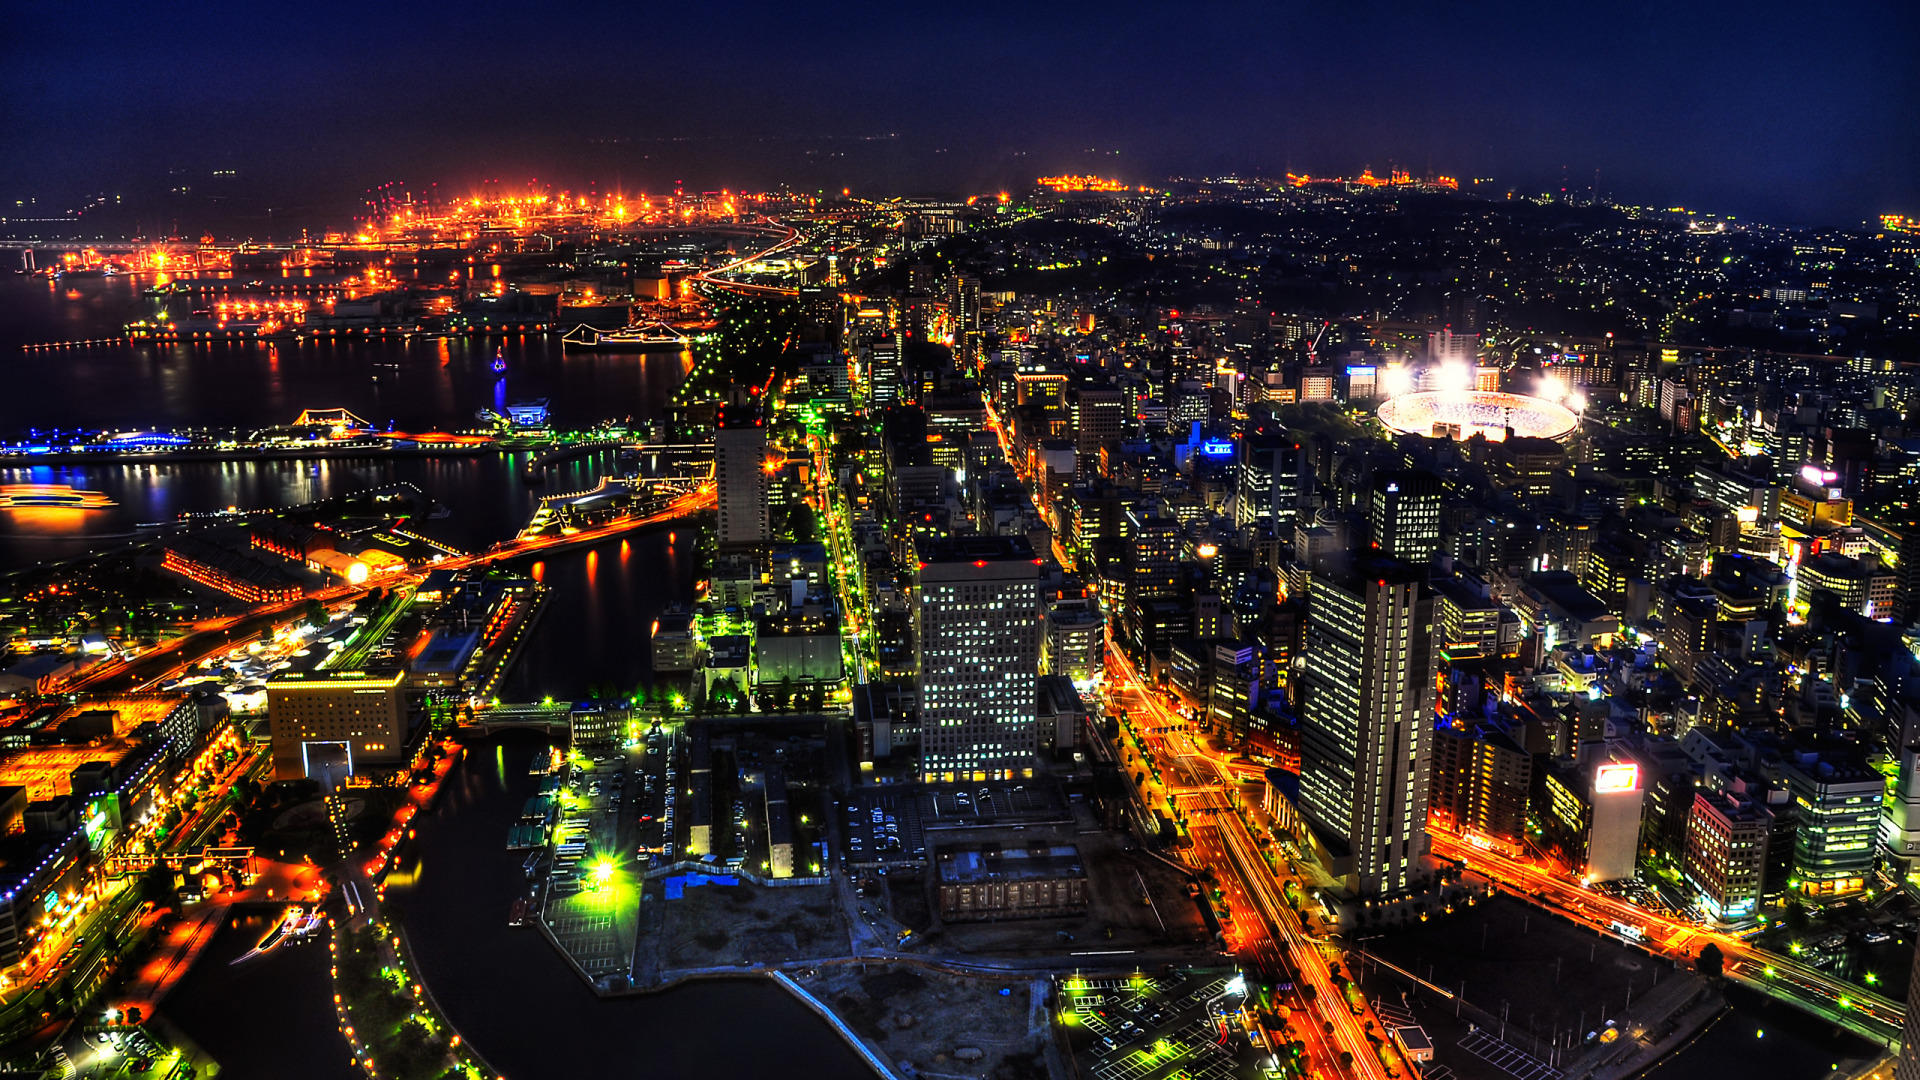 Download wallpaper night, Japan, Tokyo, Japan, Shibuya, night, section city in resolution 1920x1080